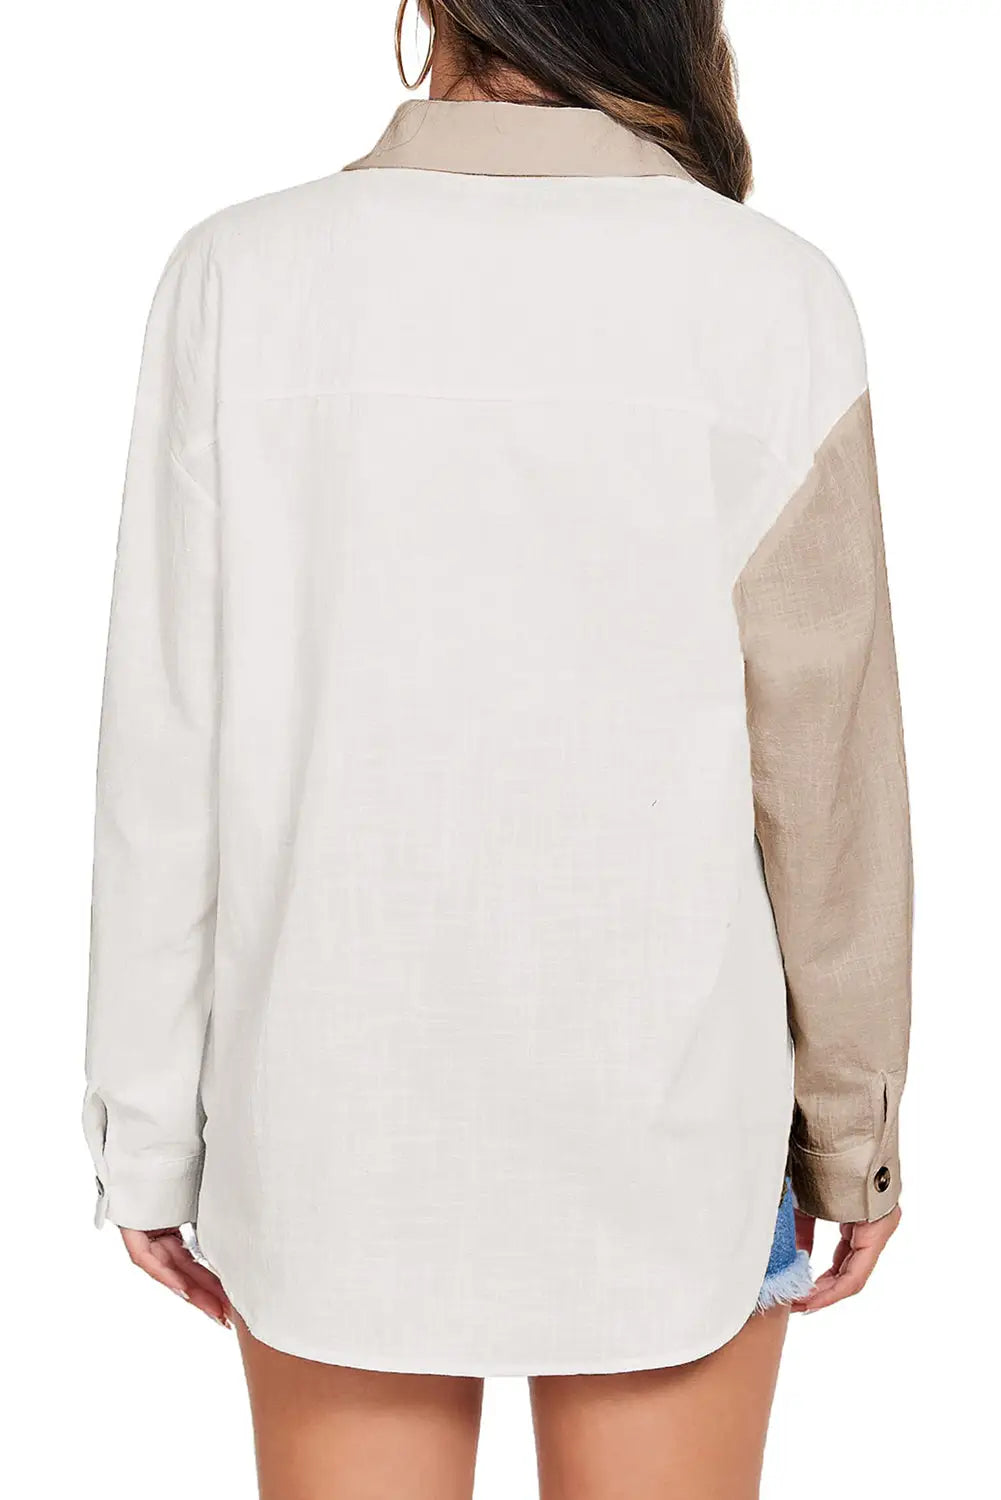 Khaki colorblock buttons shirt-collar long sleeve pocket blouse - tops